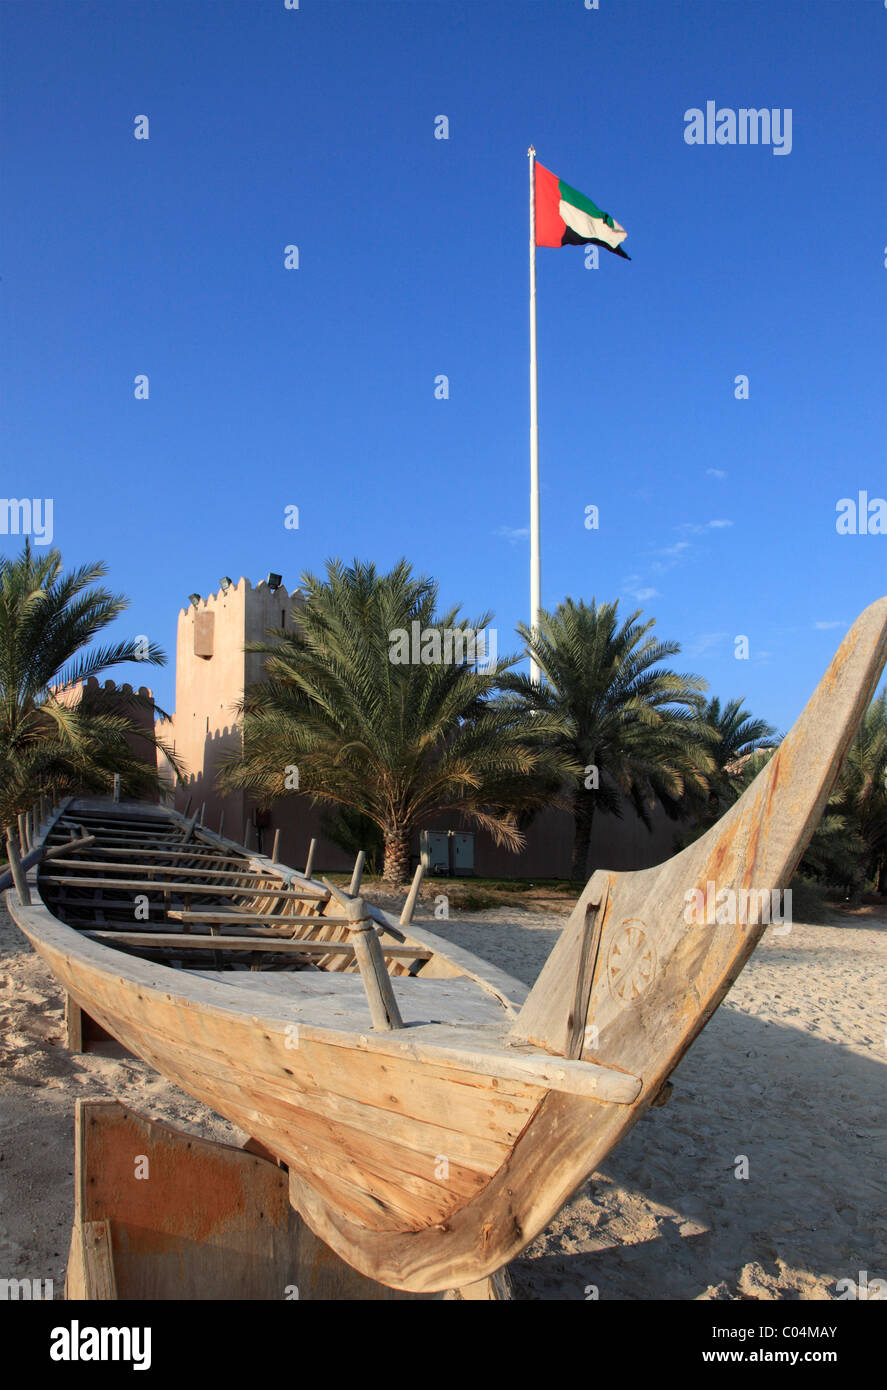 Emirats arabes unis, Abu Dhabi, Heritage Village, bateau traditionnel, Banque D'Images